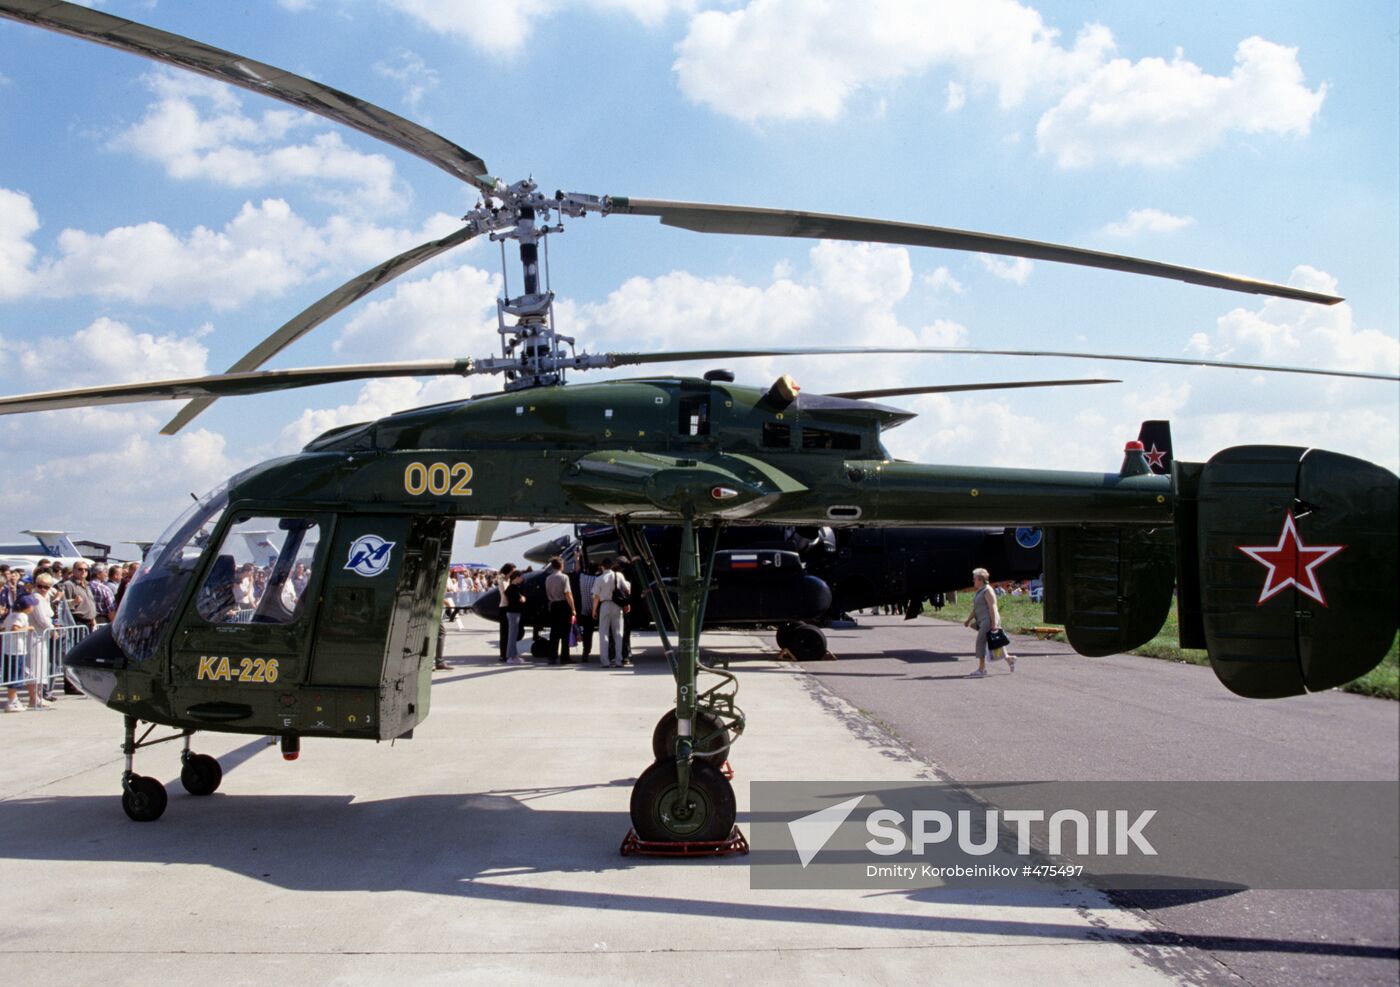 Ka-226 helicopter